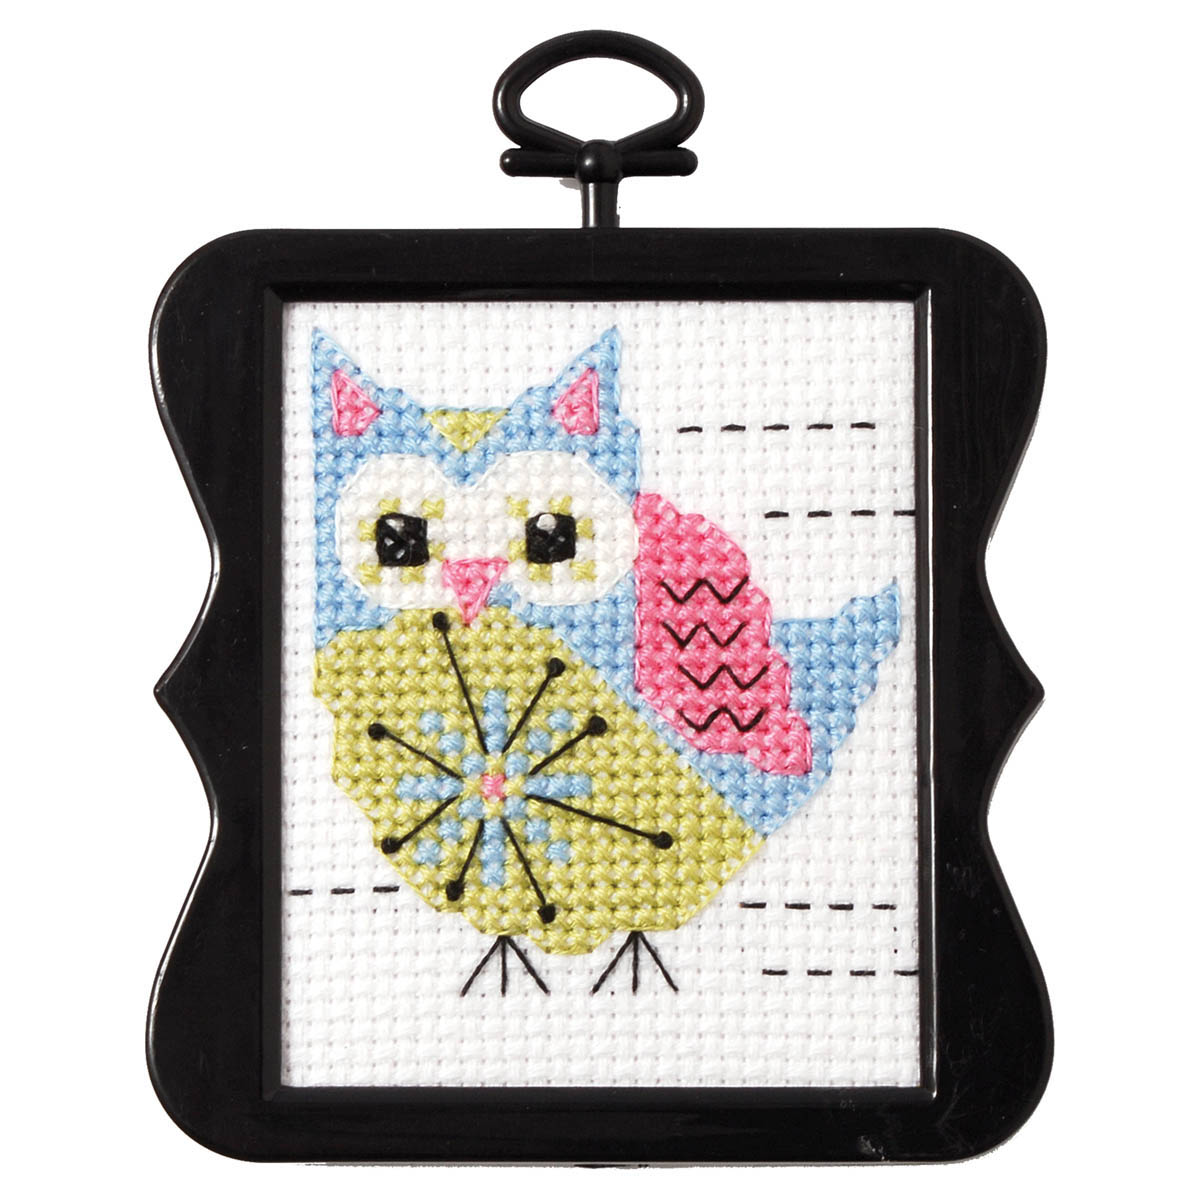 Bucilla ® Counted Cross Stitch - Beginner Stitchery - Mini - Flower Owl - 45749